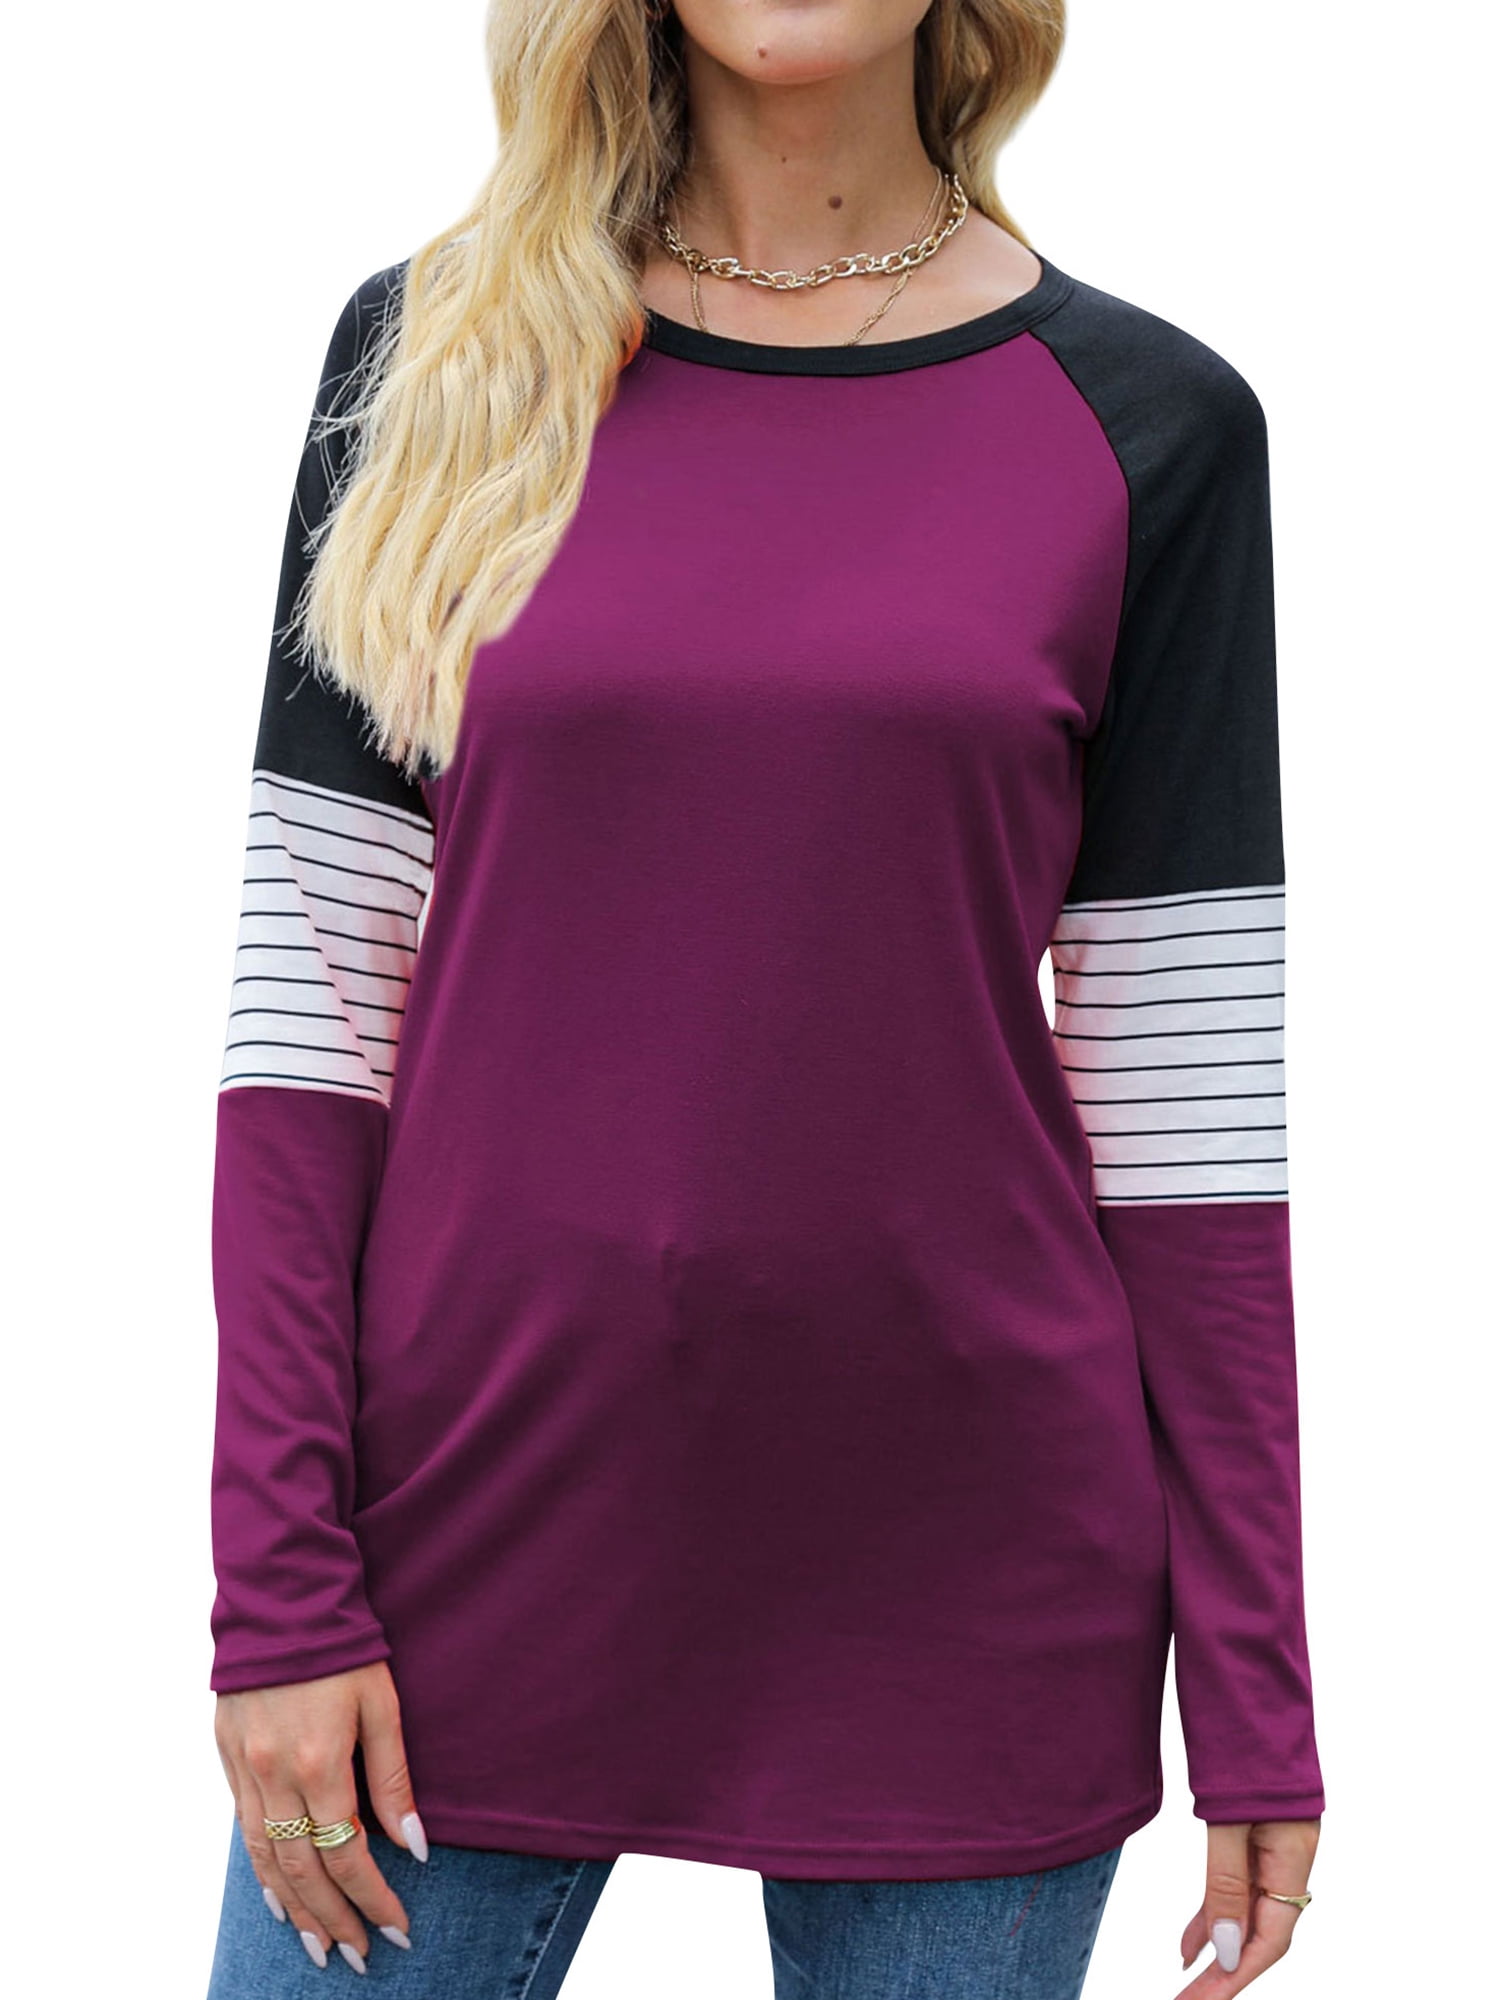 Nlife Women Colorblock Stripe Stitching Raglan Sleeve T-shirt Long